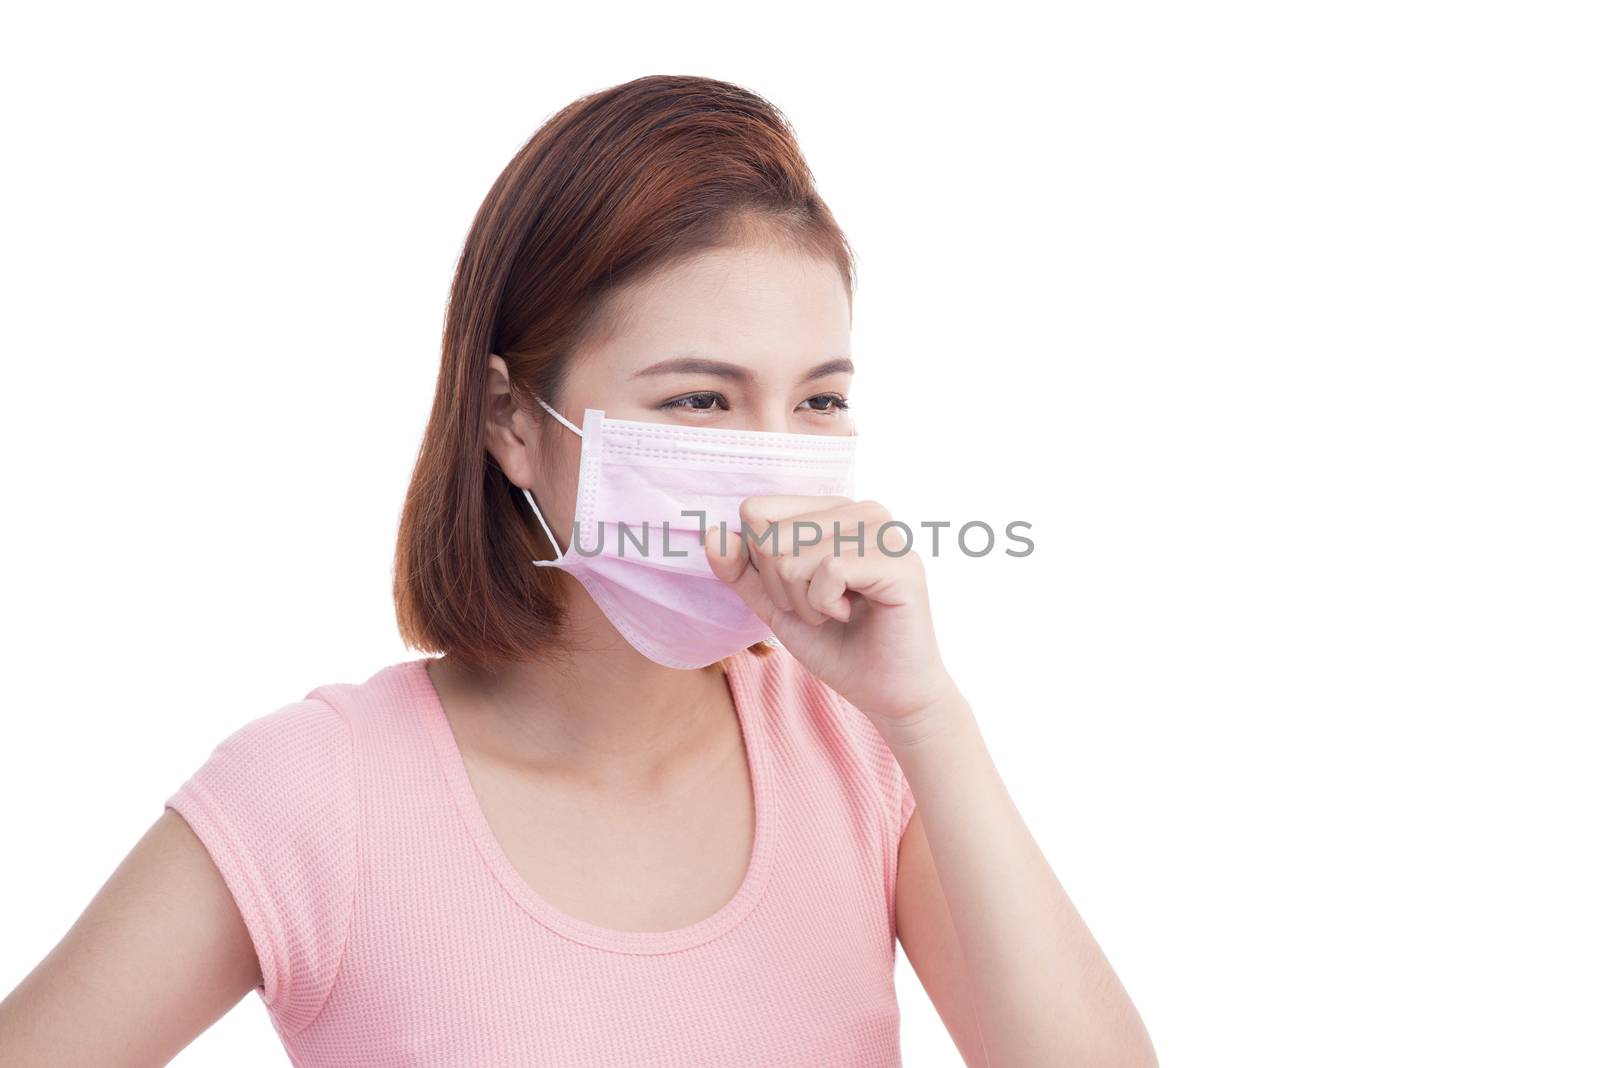 Woman get sick. Asian young woman wear medical face mask